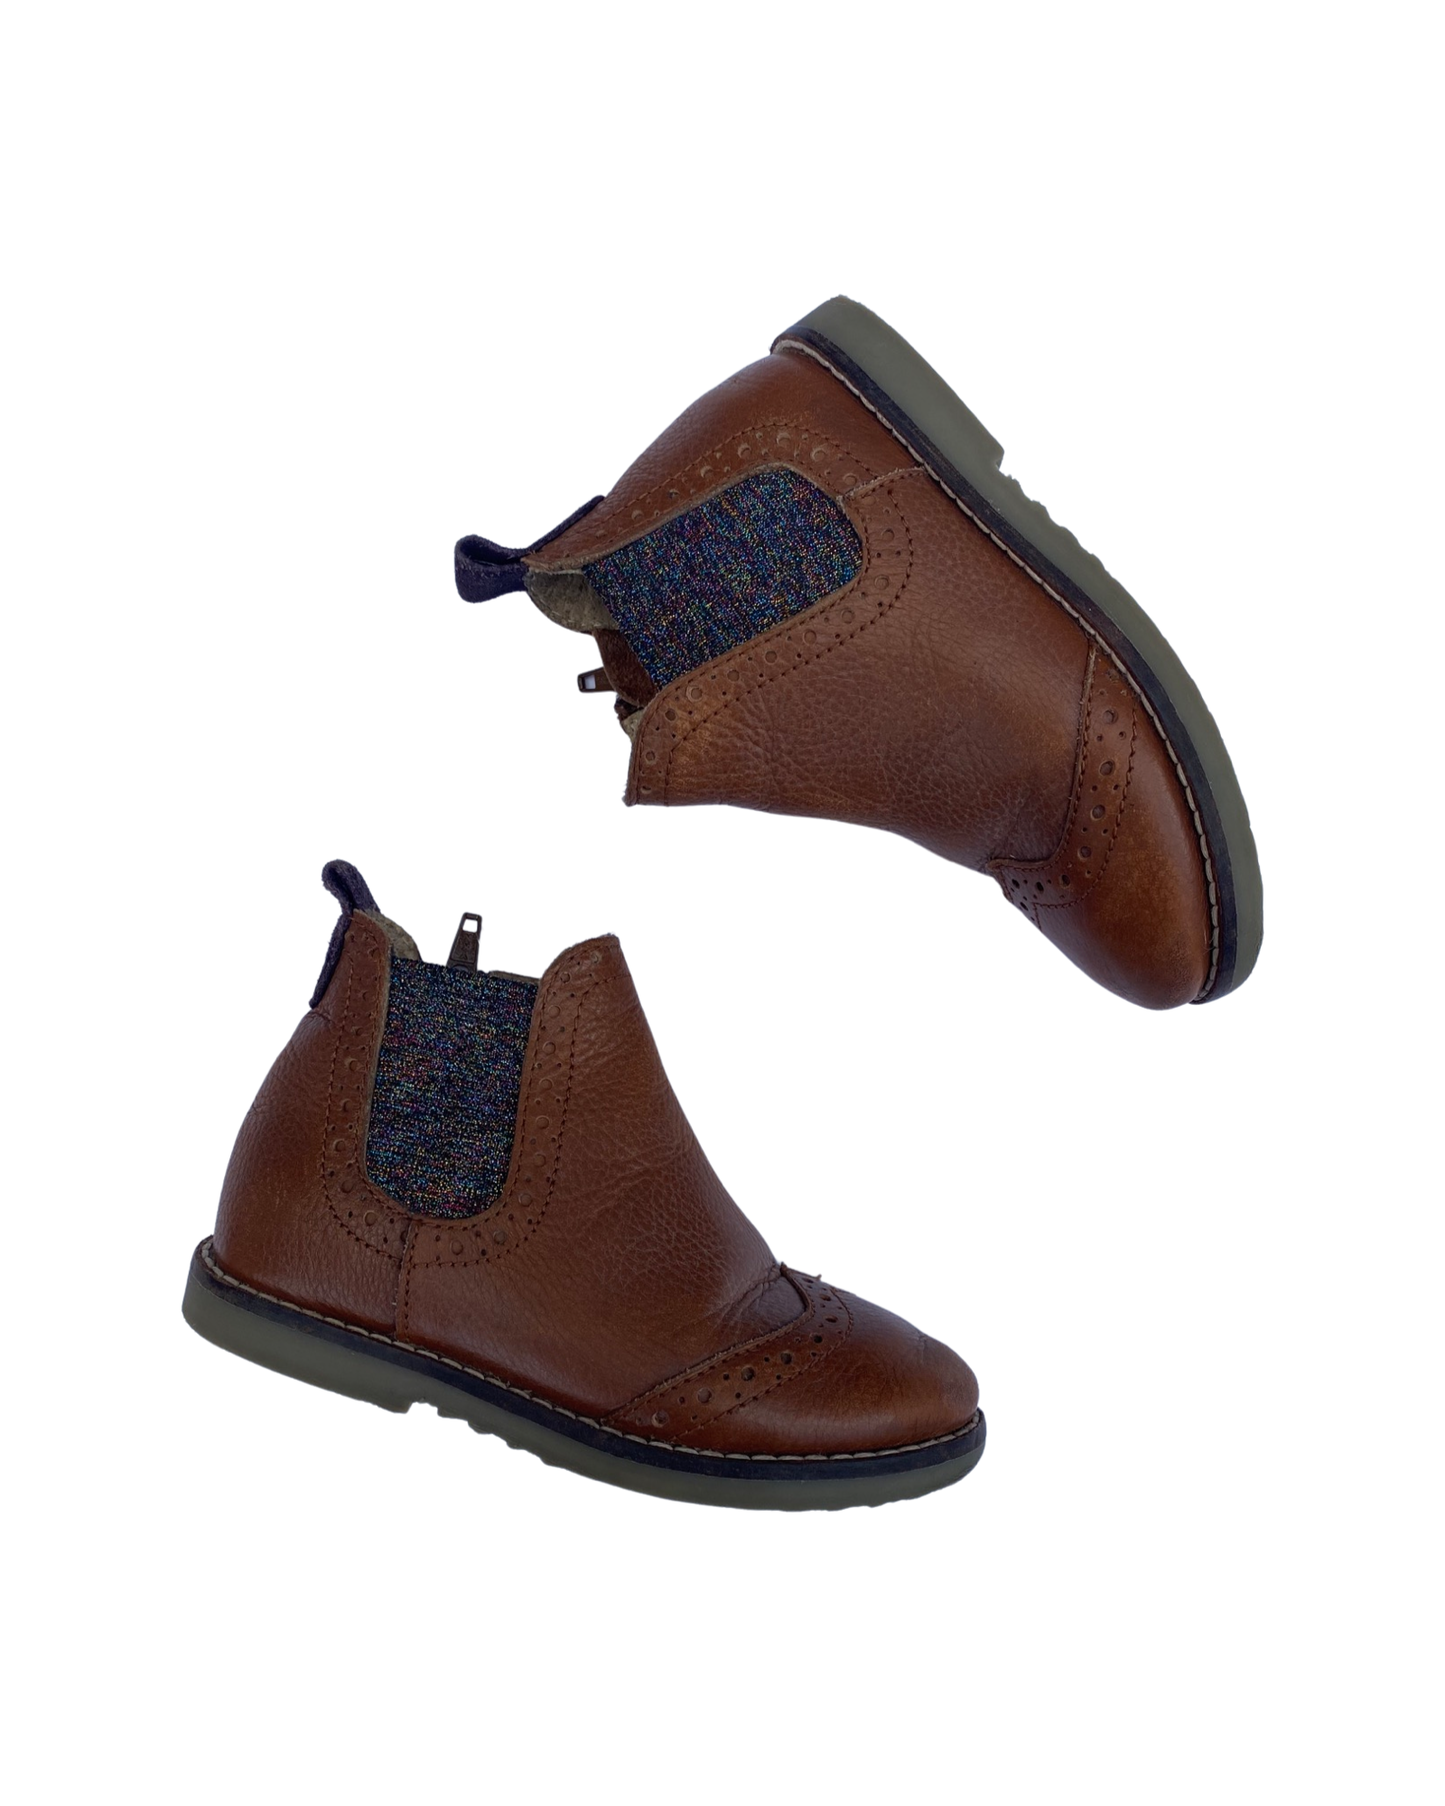 Mini Boden tan chelsea boots (size UK8/EU26)